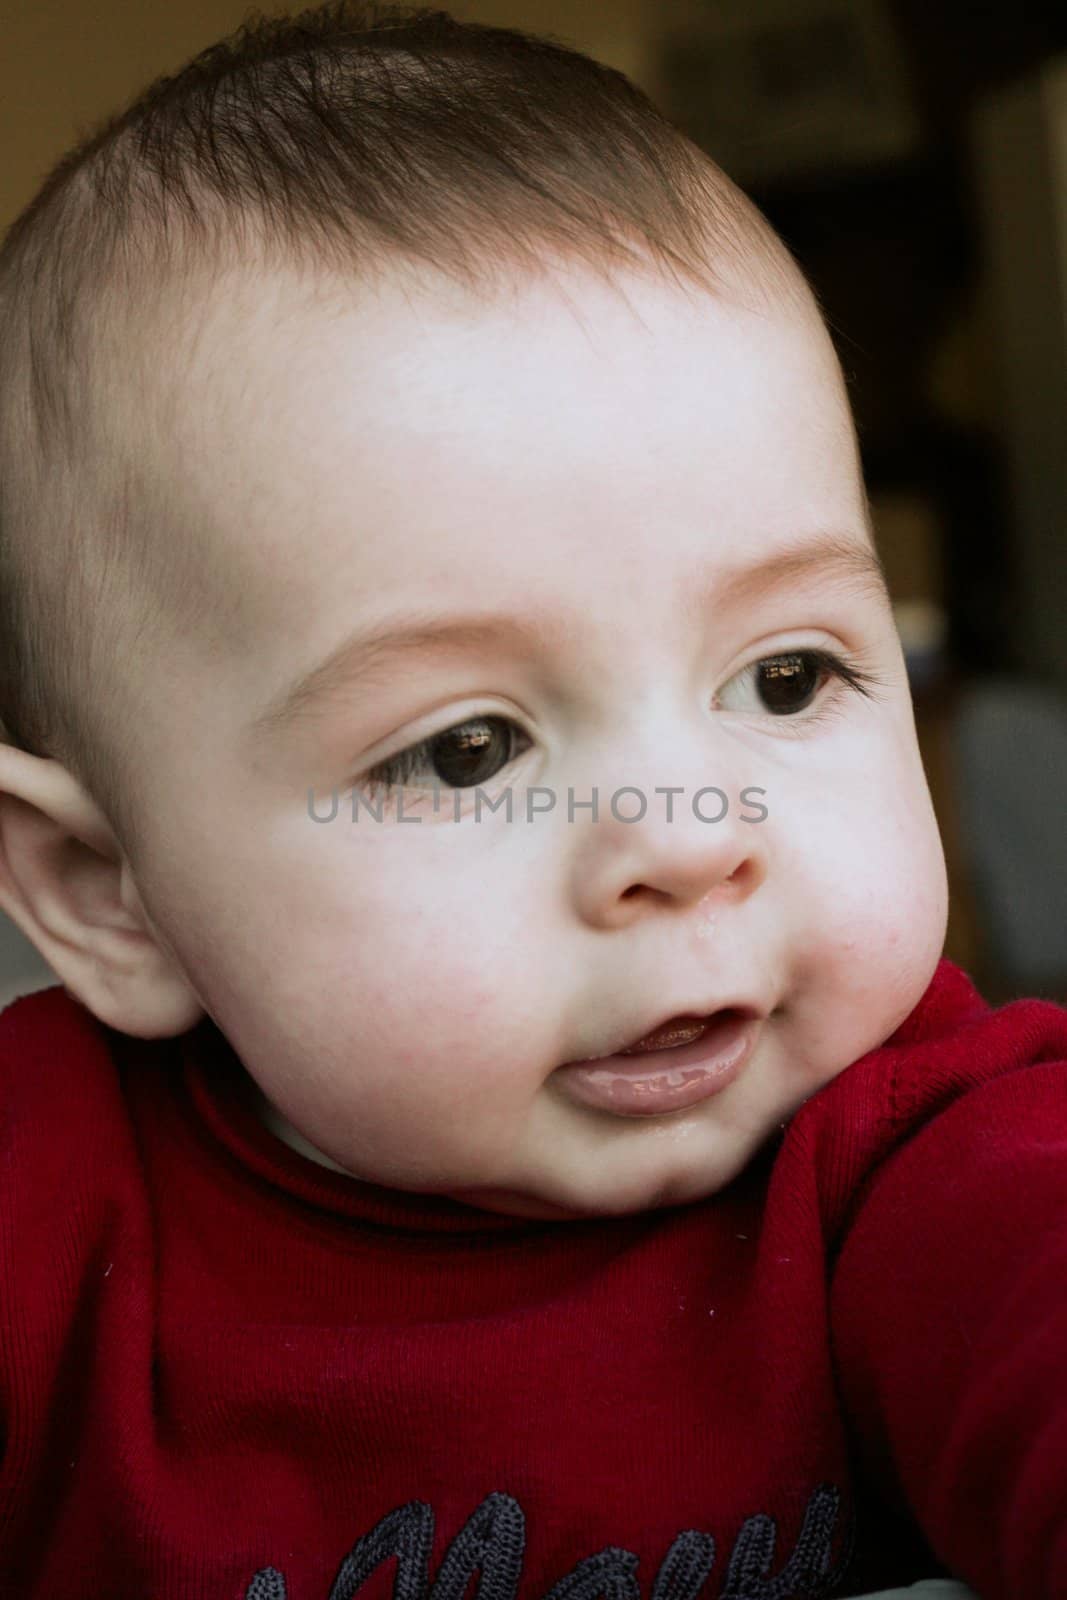 Adorable six month old baby boy by jarenwicklund